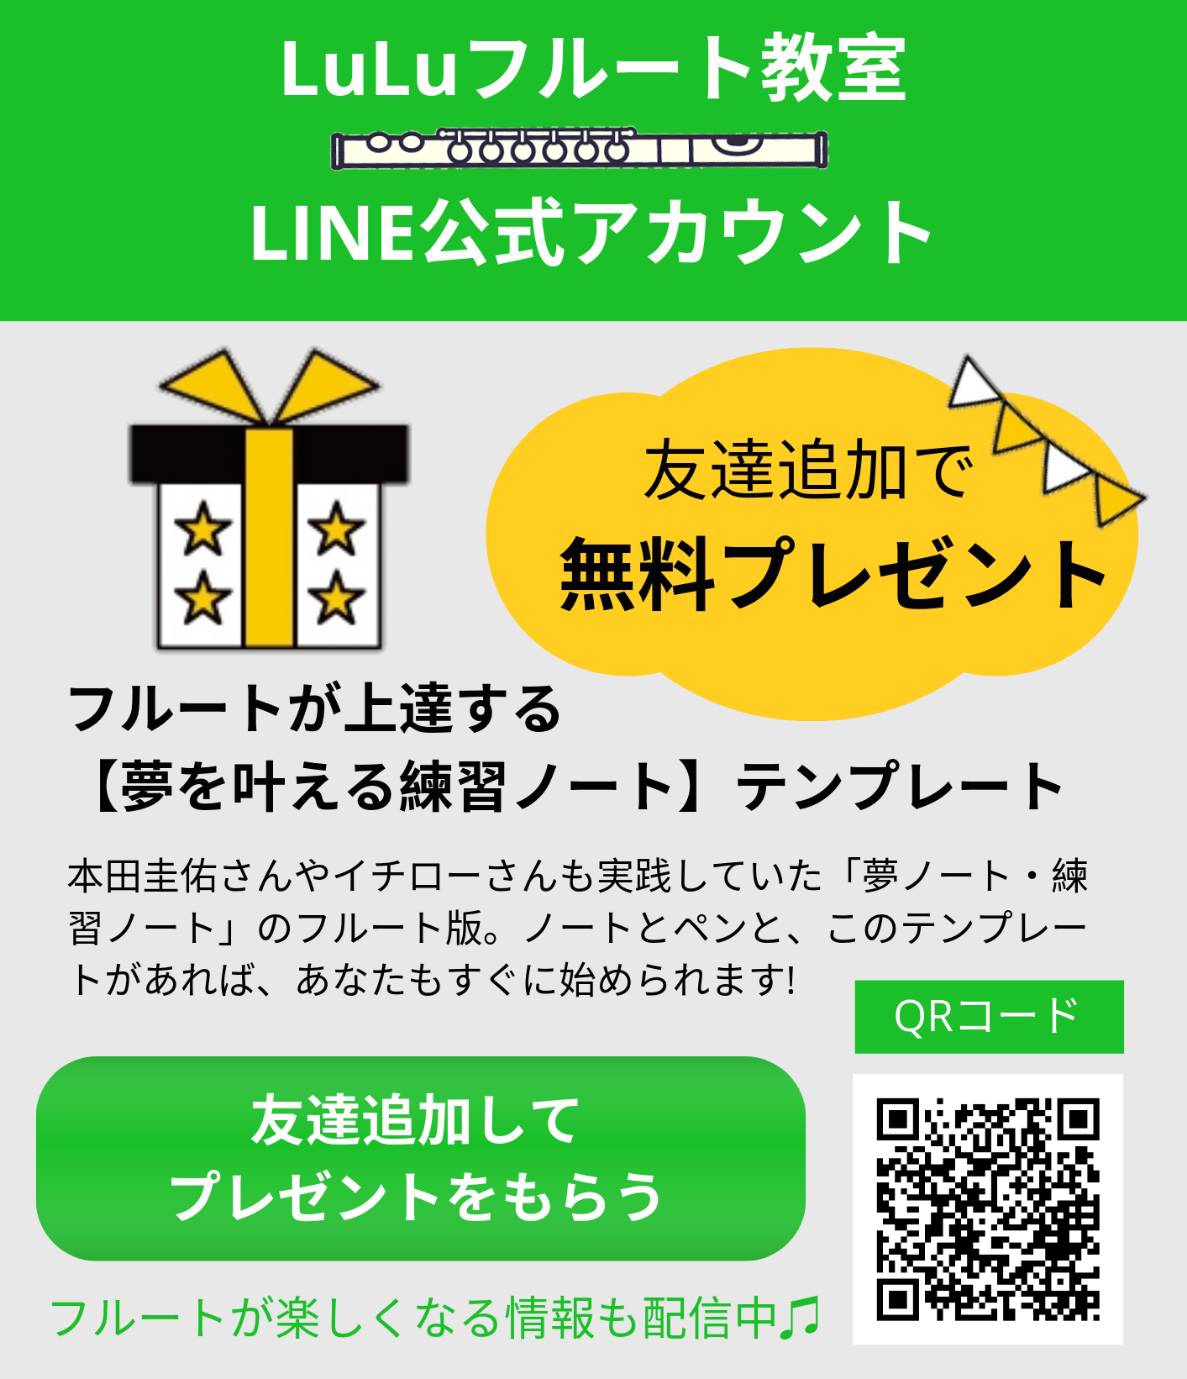 Line公式アカウントに友達追加で無料プレゼント Luluフルート教室